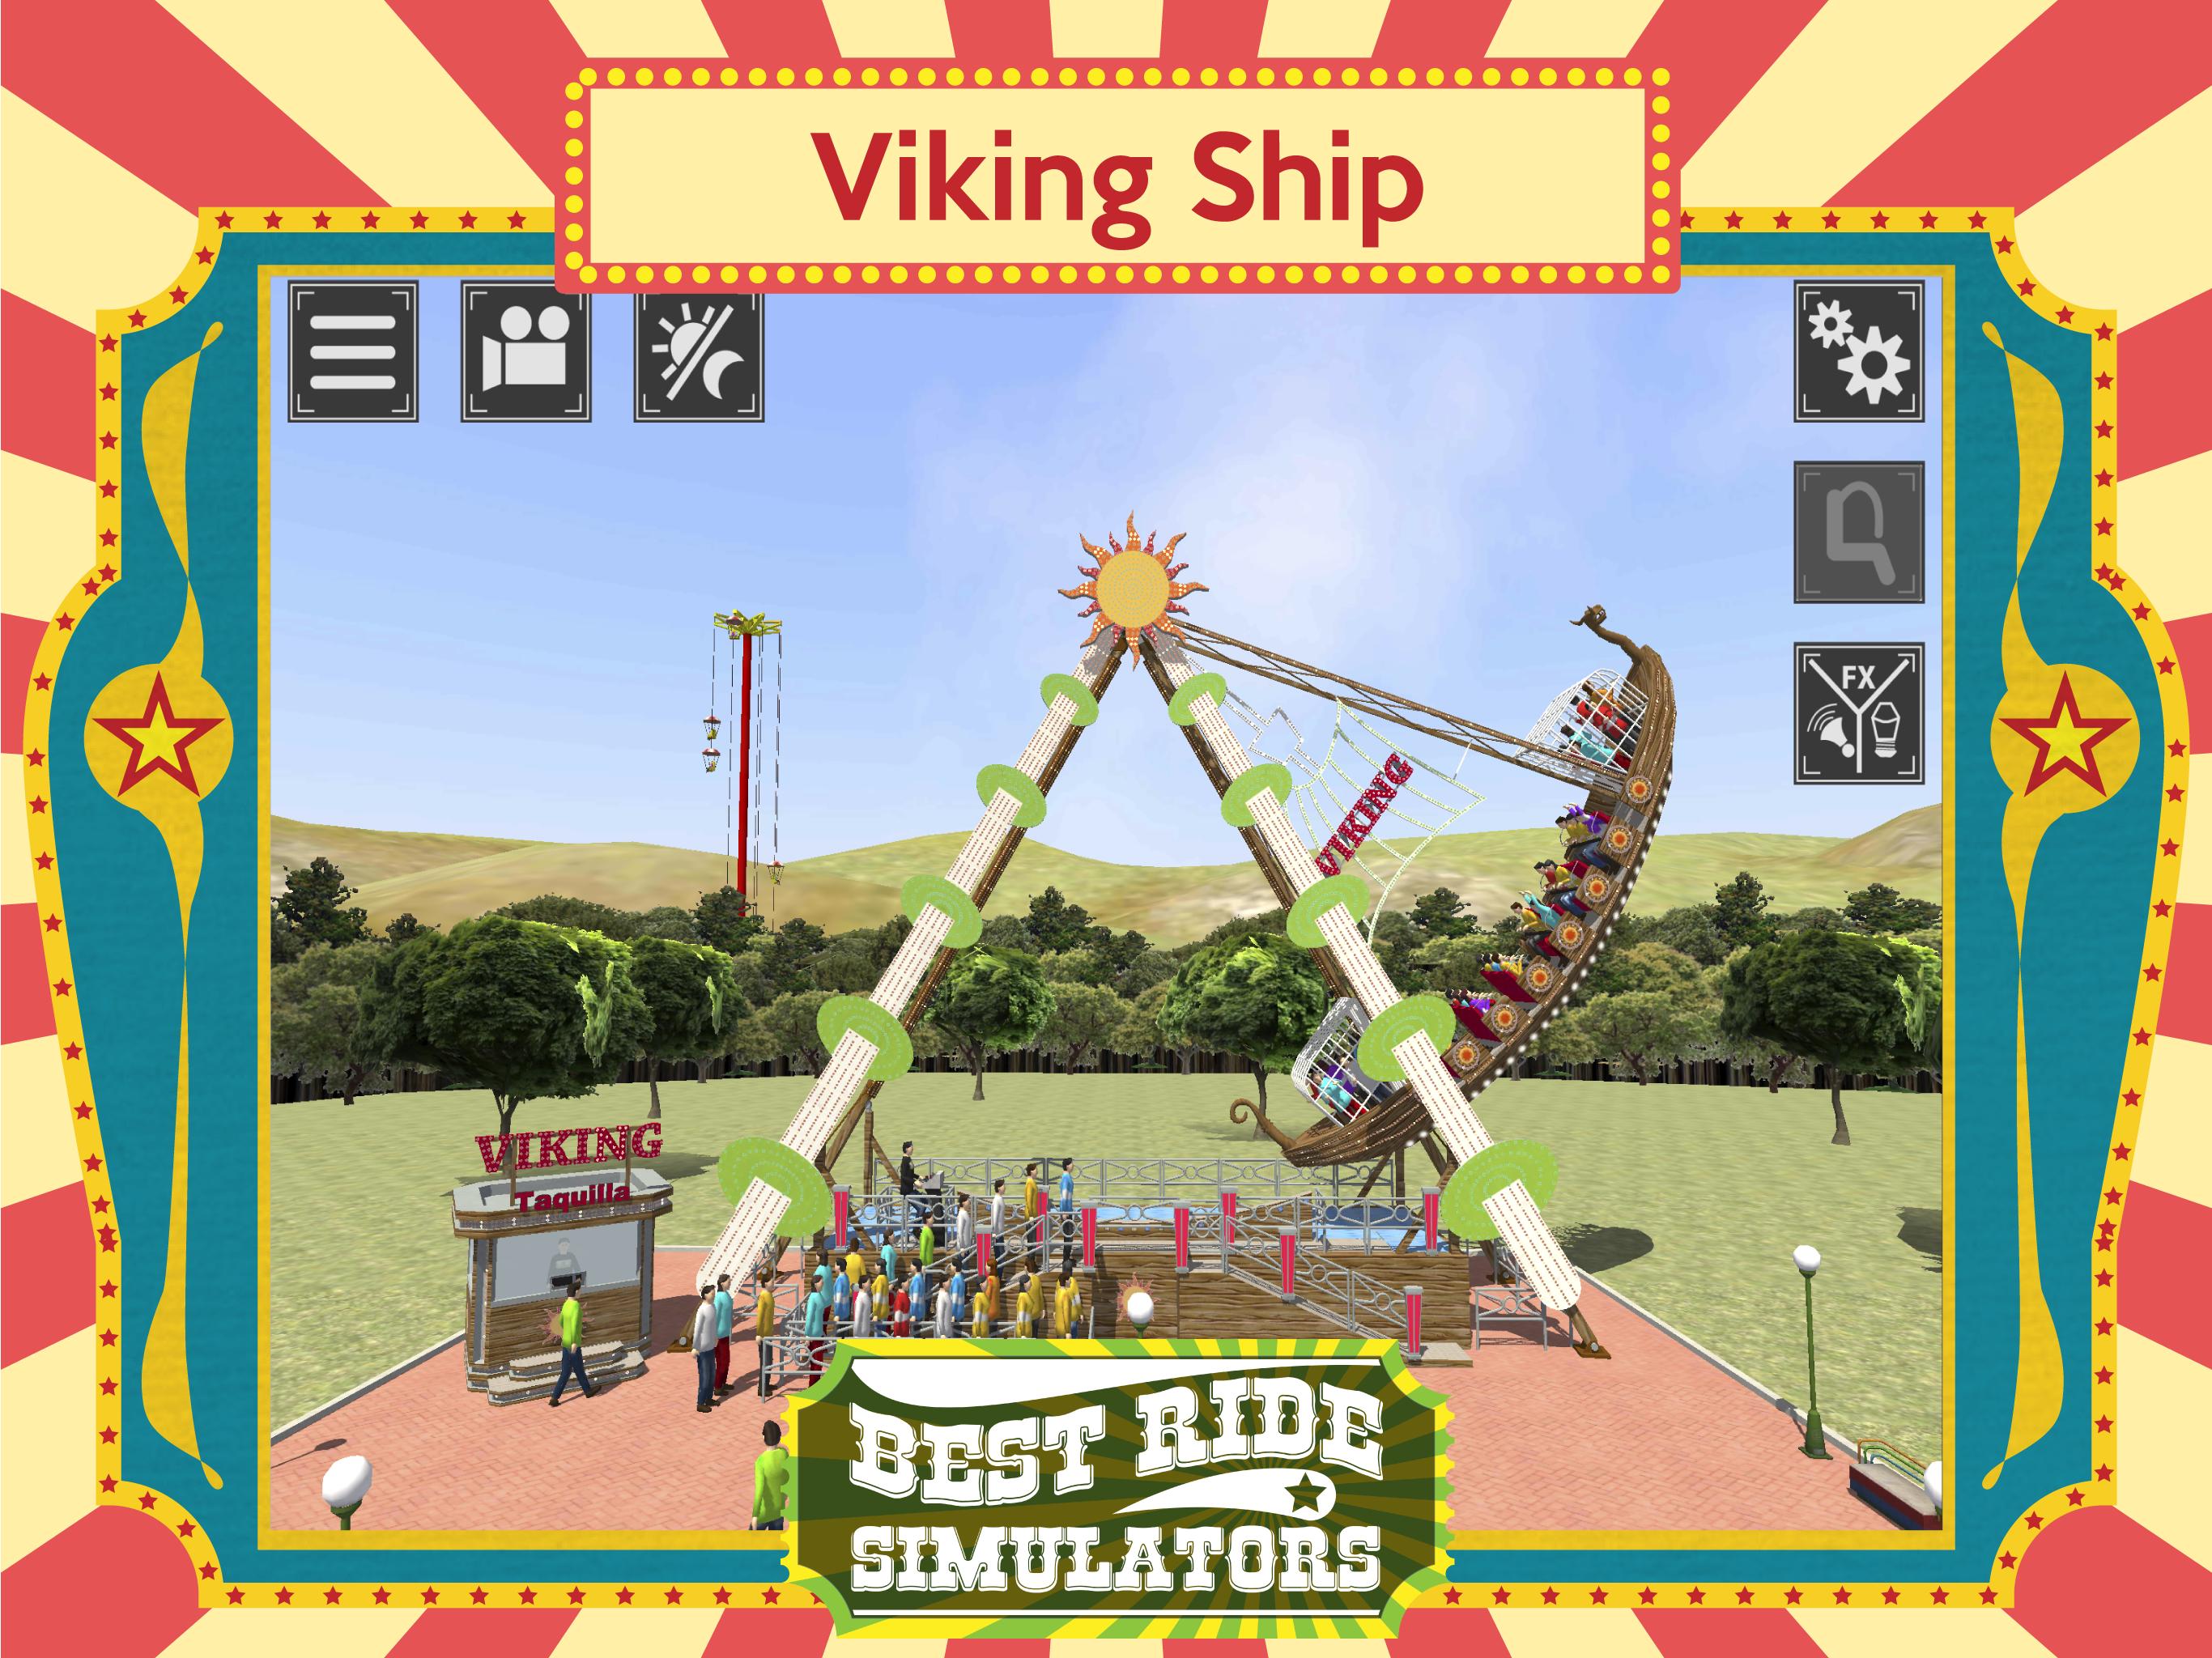 Стимулятор Viking berco best Ride Simulator.. Ливерпуль Лунапарк Викинги. 3d Viking ship model for Lunapark.